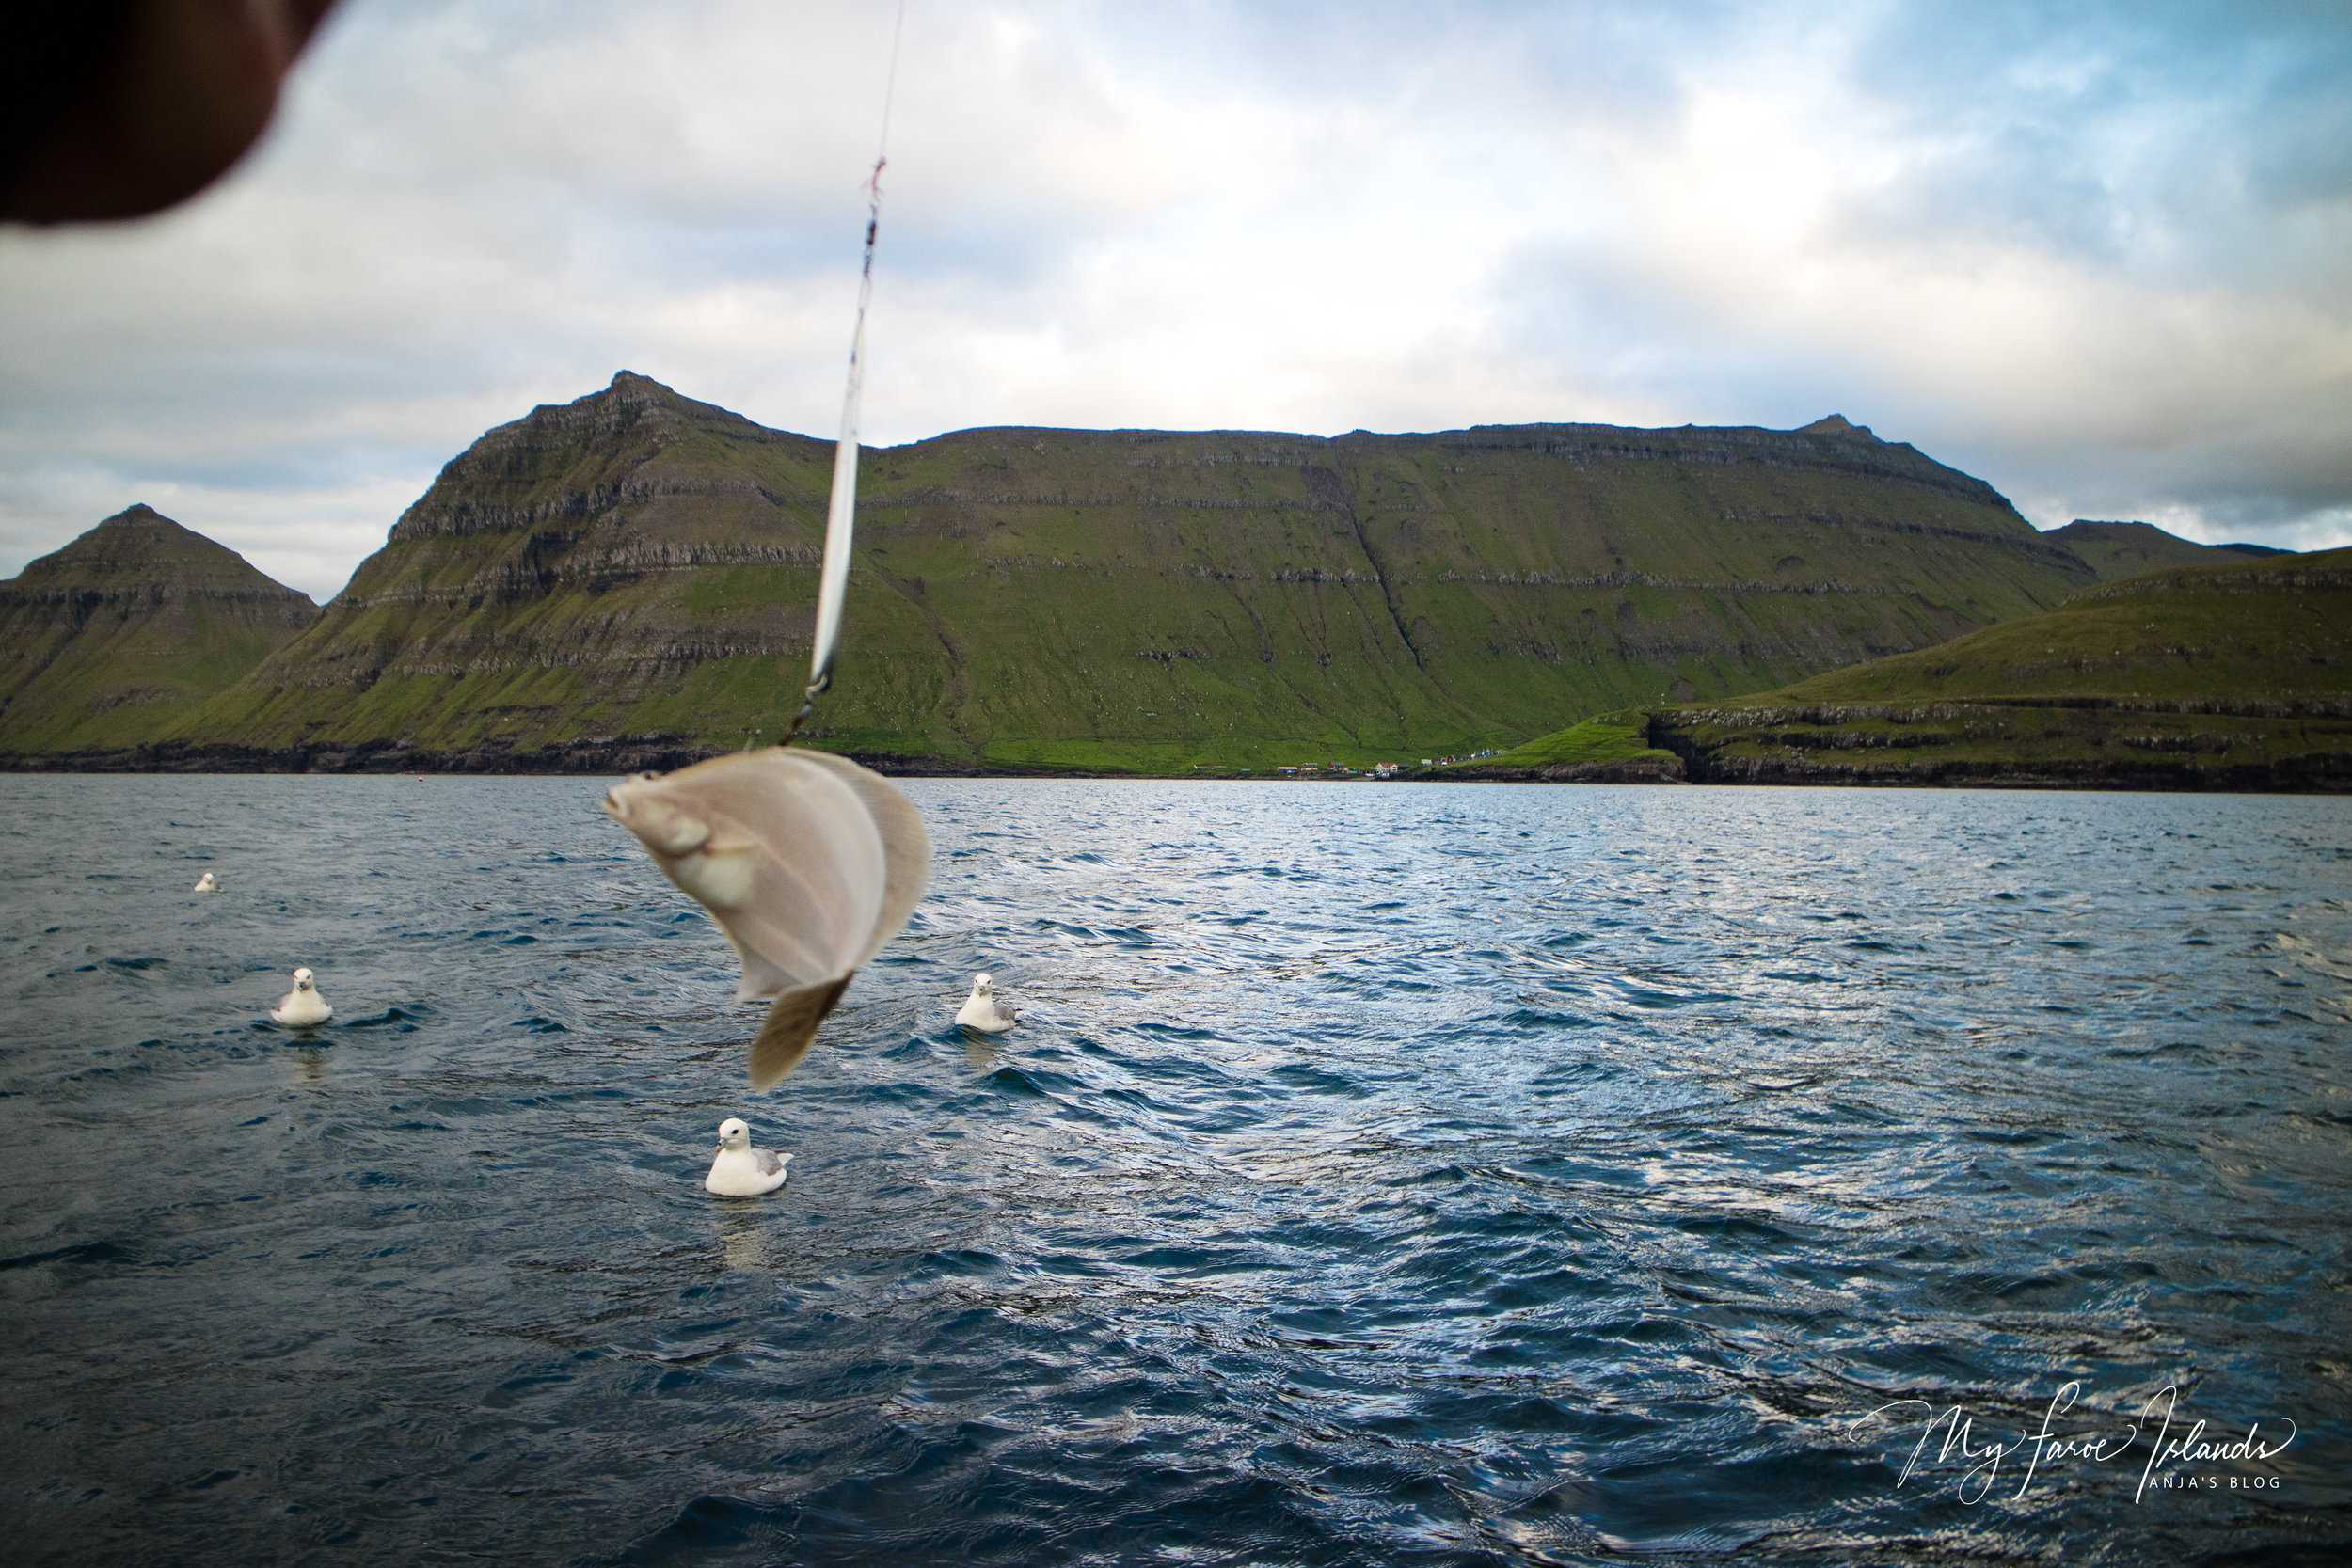 Catch 1 © My Faroe Islands, Anja Mazuhn  (1 von 1).jpg